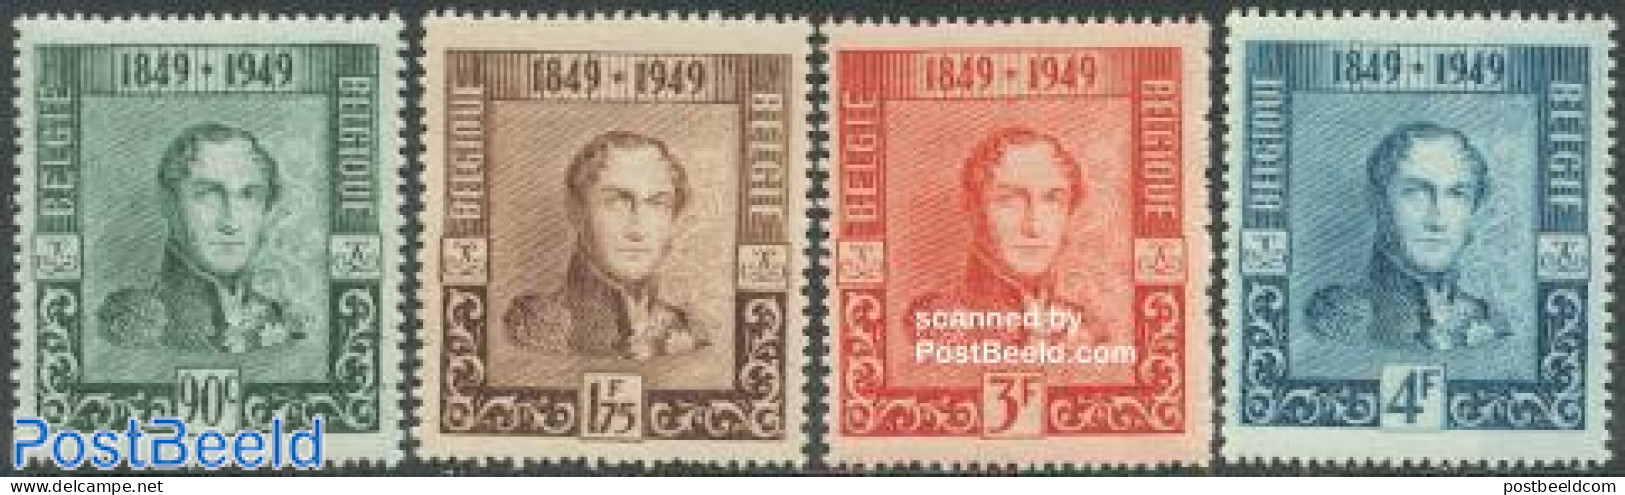 Belgium 1949 Stamp Centenary 4v, Unused (hinged), Stamps On Stamps - Ongebruikt